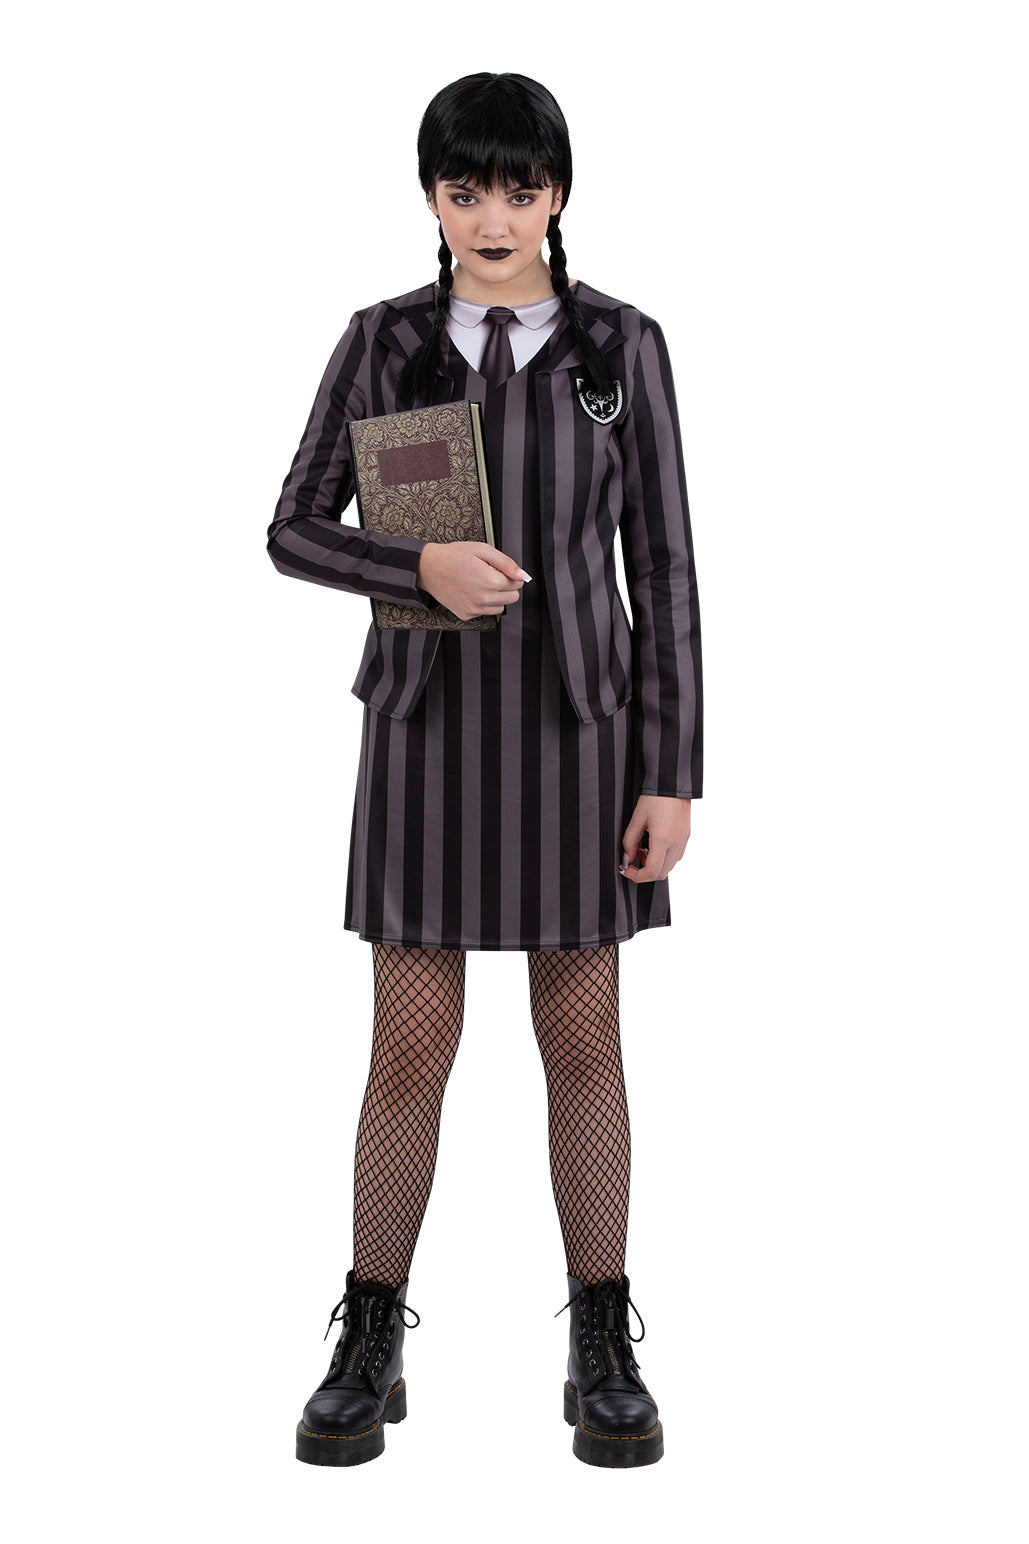 Kids Gothic School Uniform Costume